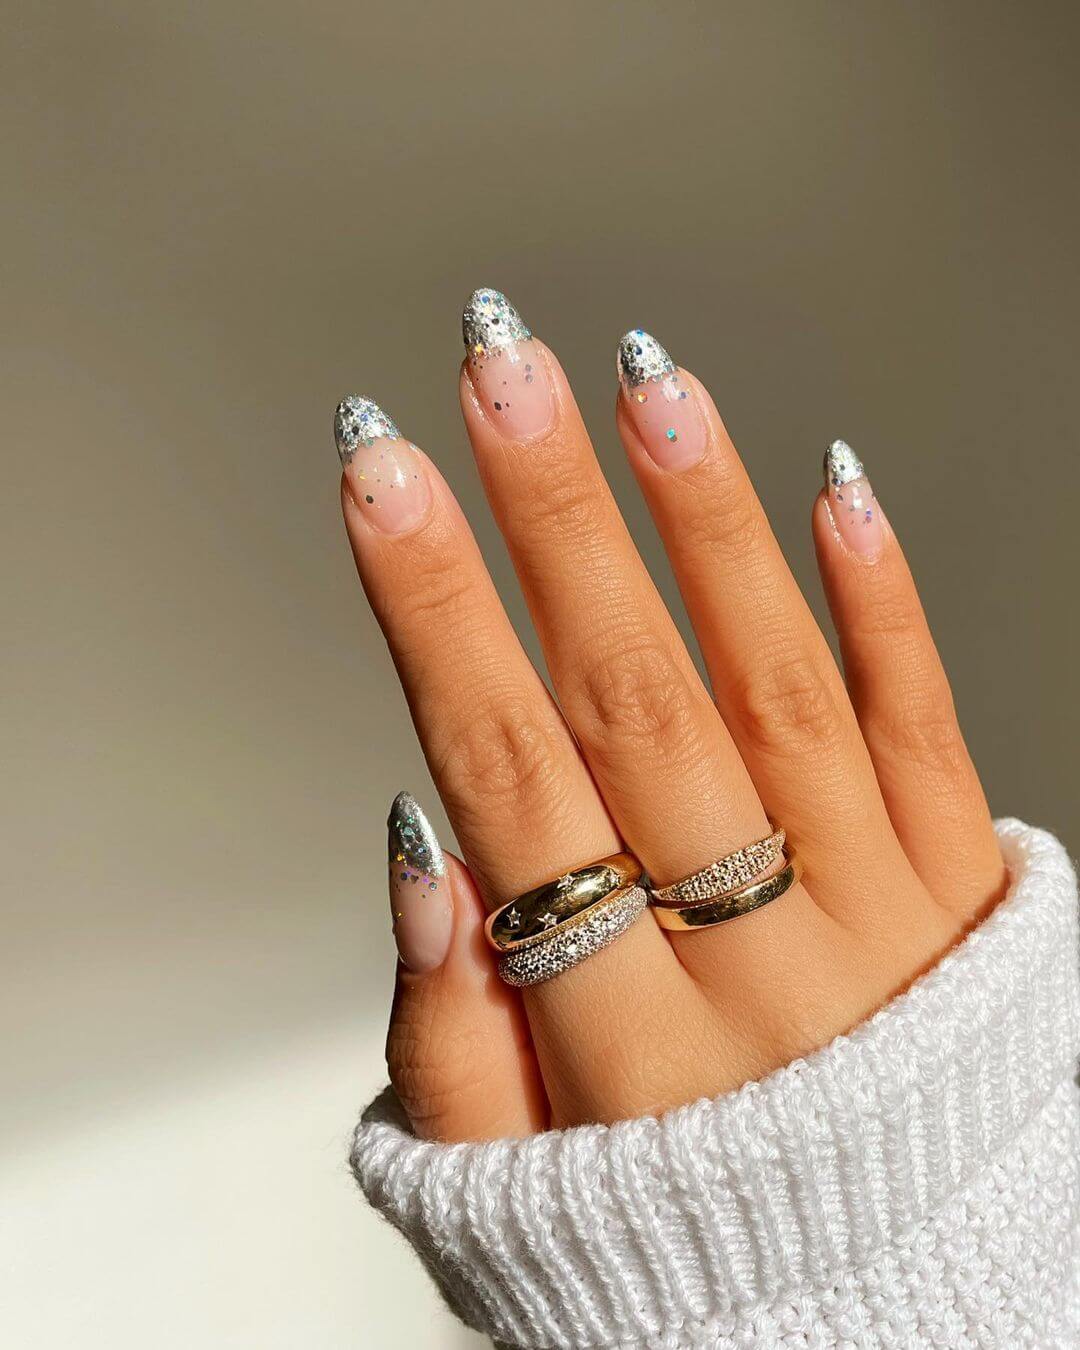 Silver Nail Art Designs Silver in nude nail art design